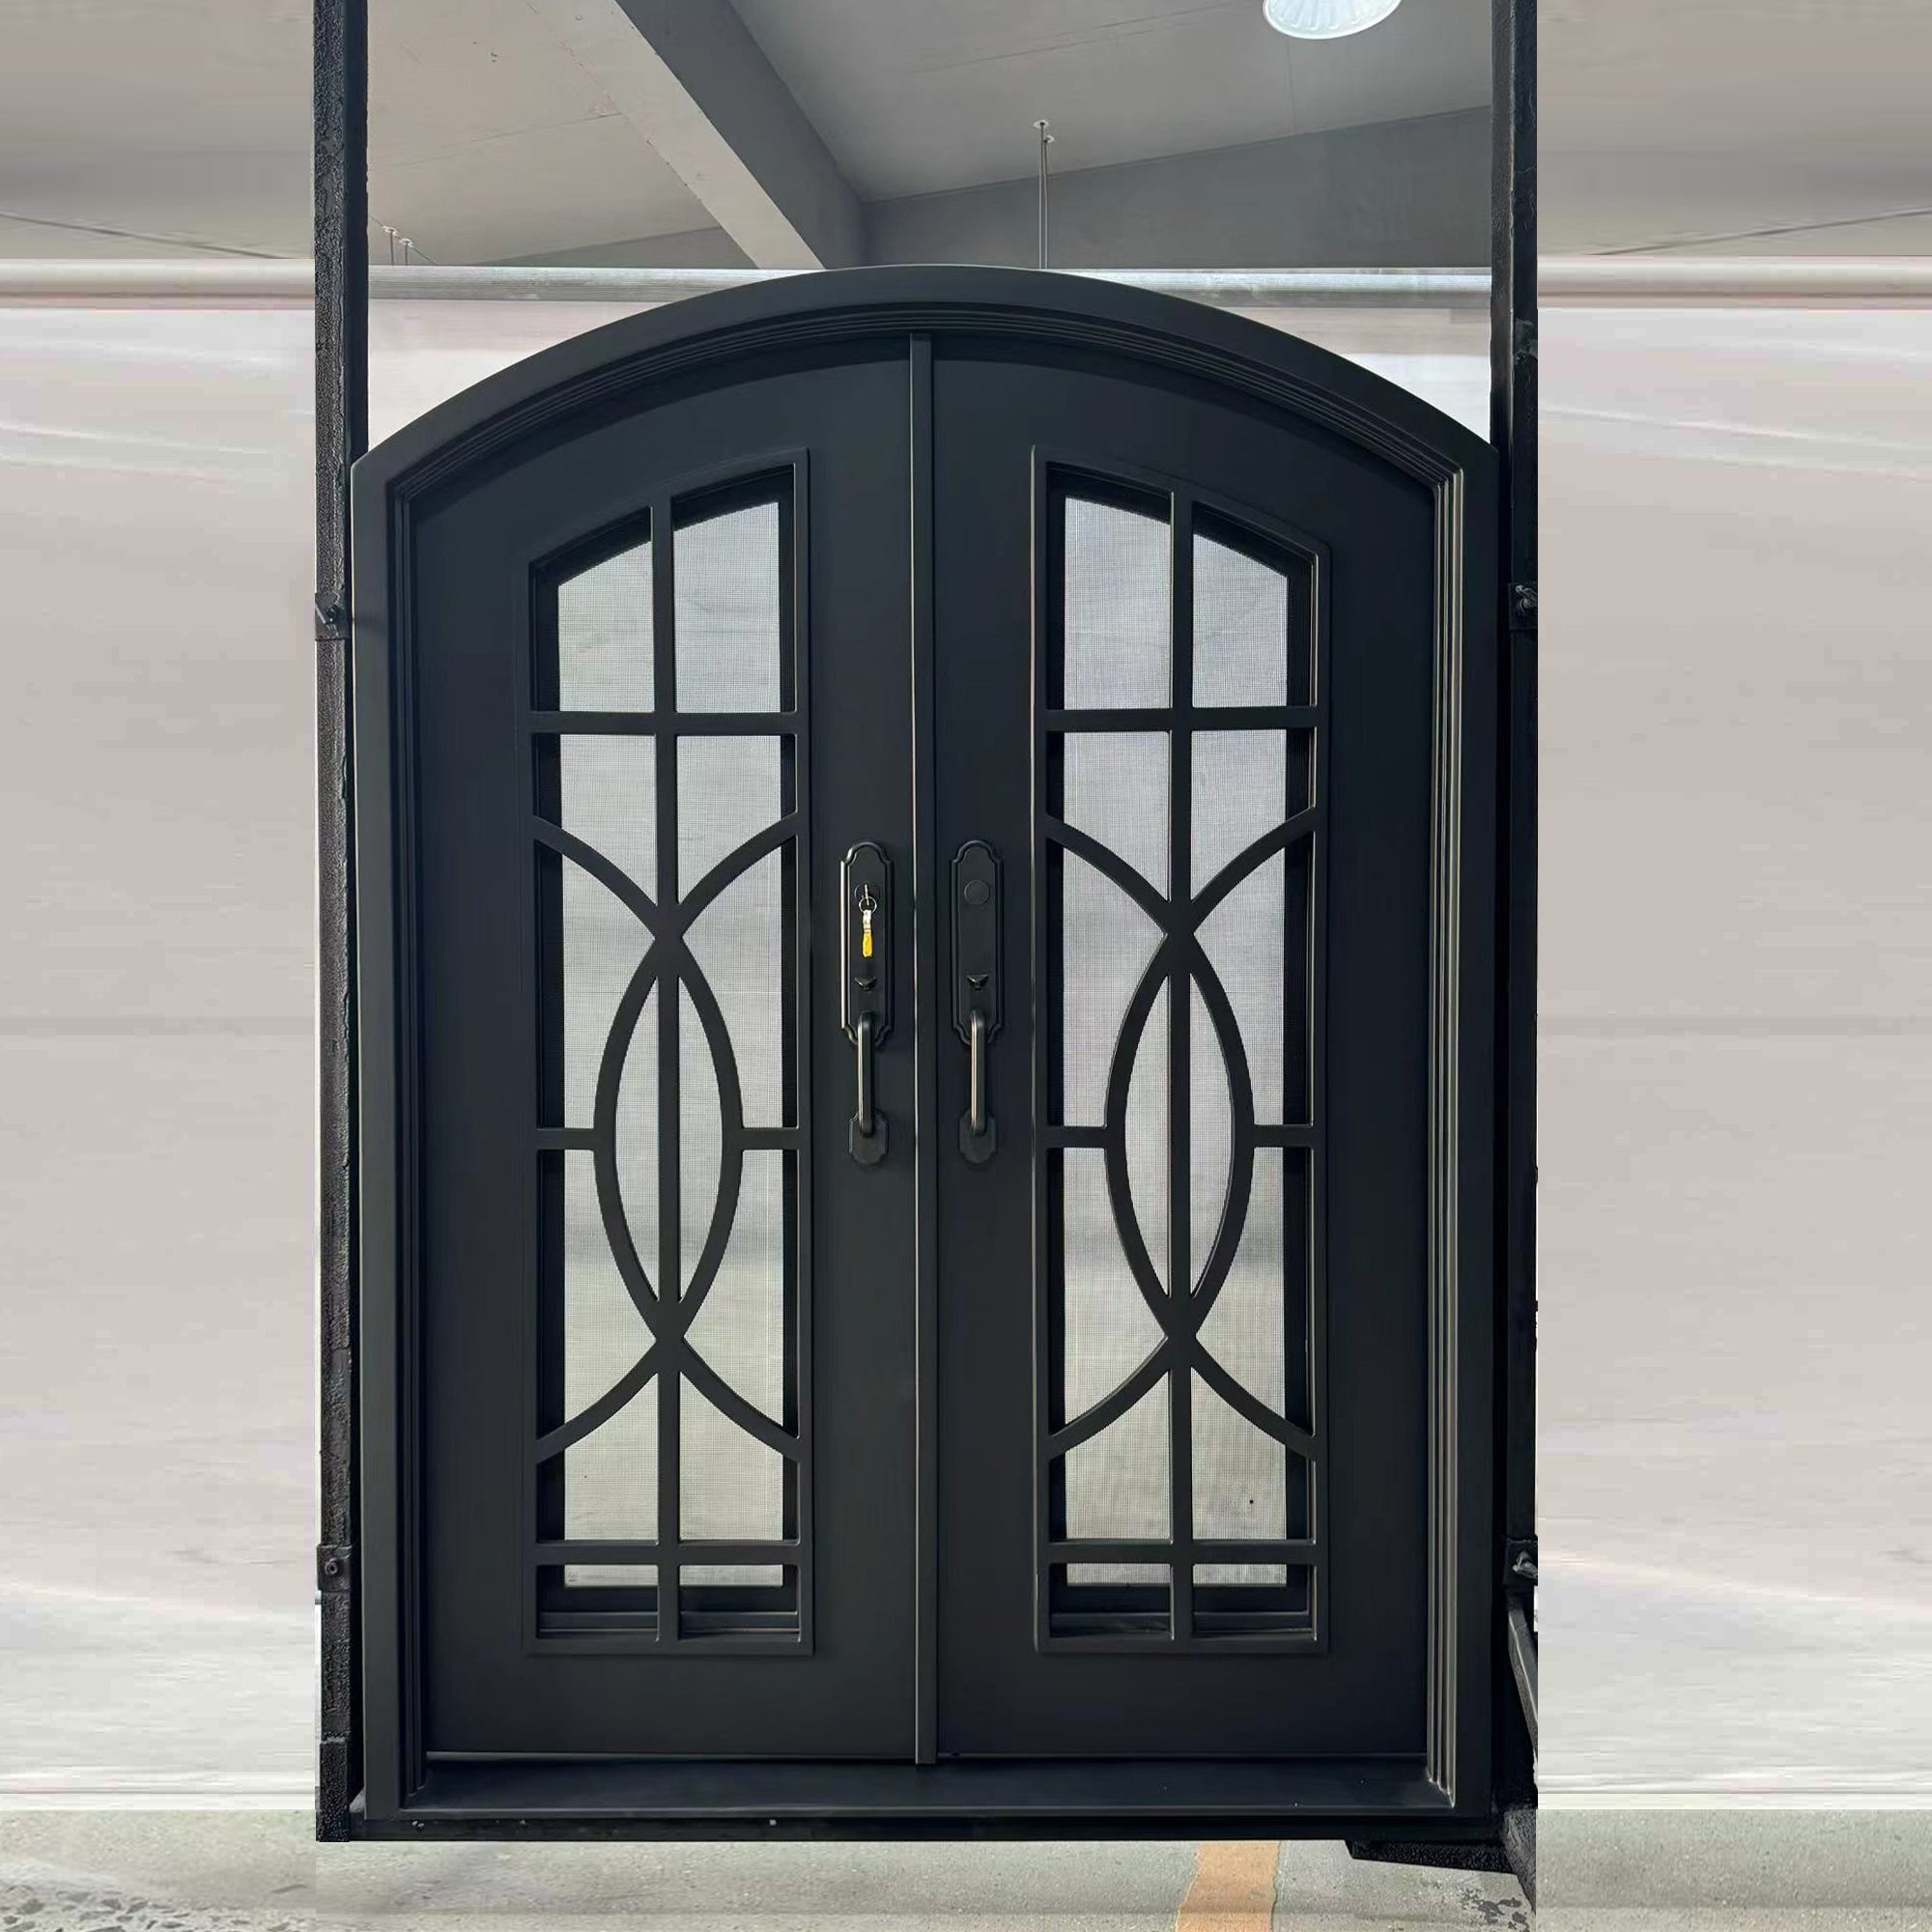 gloryirondoors iron double doors in matte black color, having sleek iron design